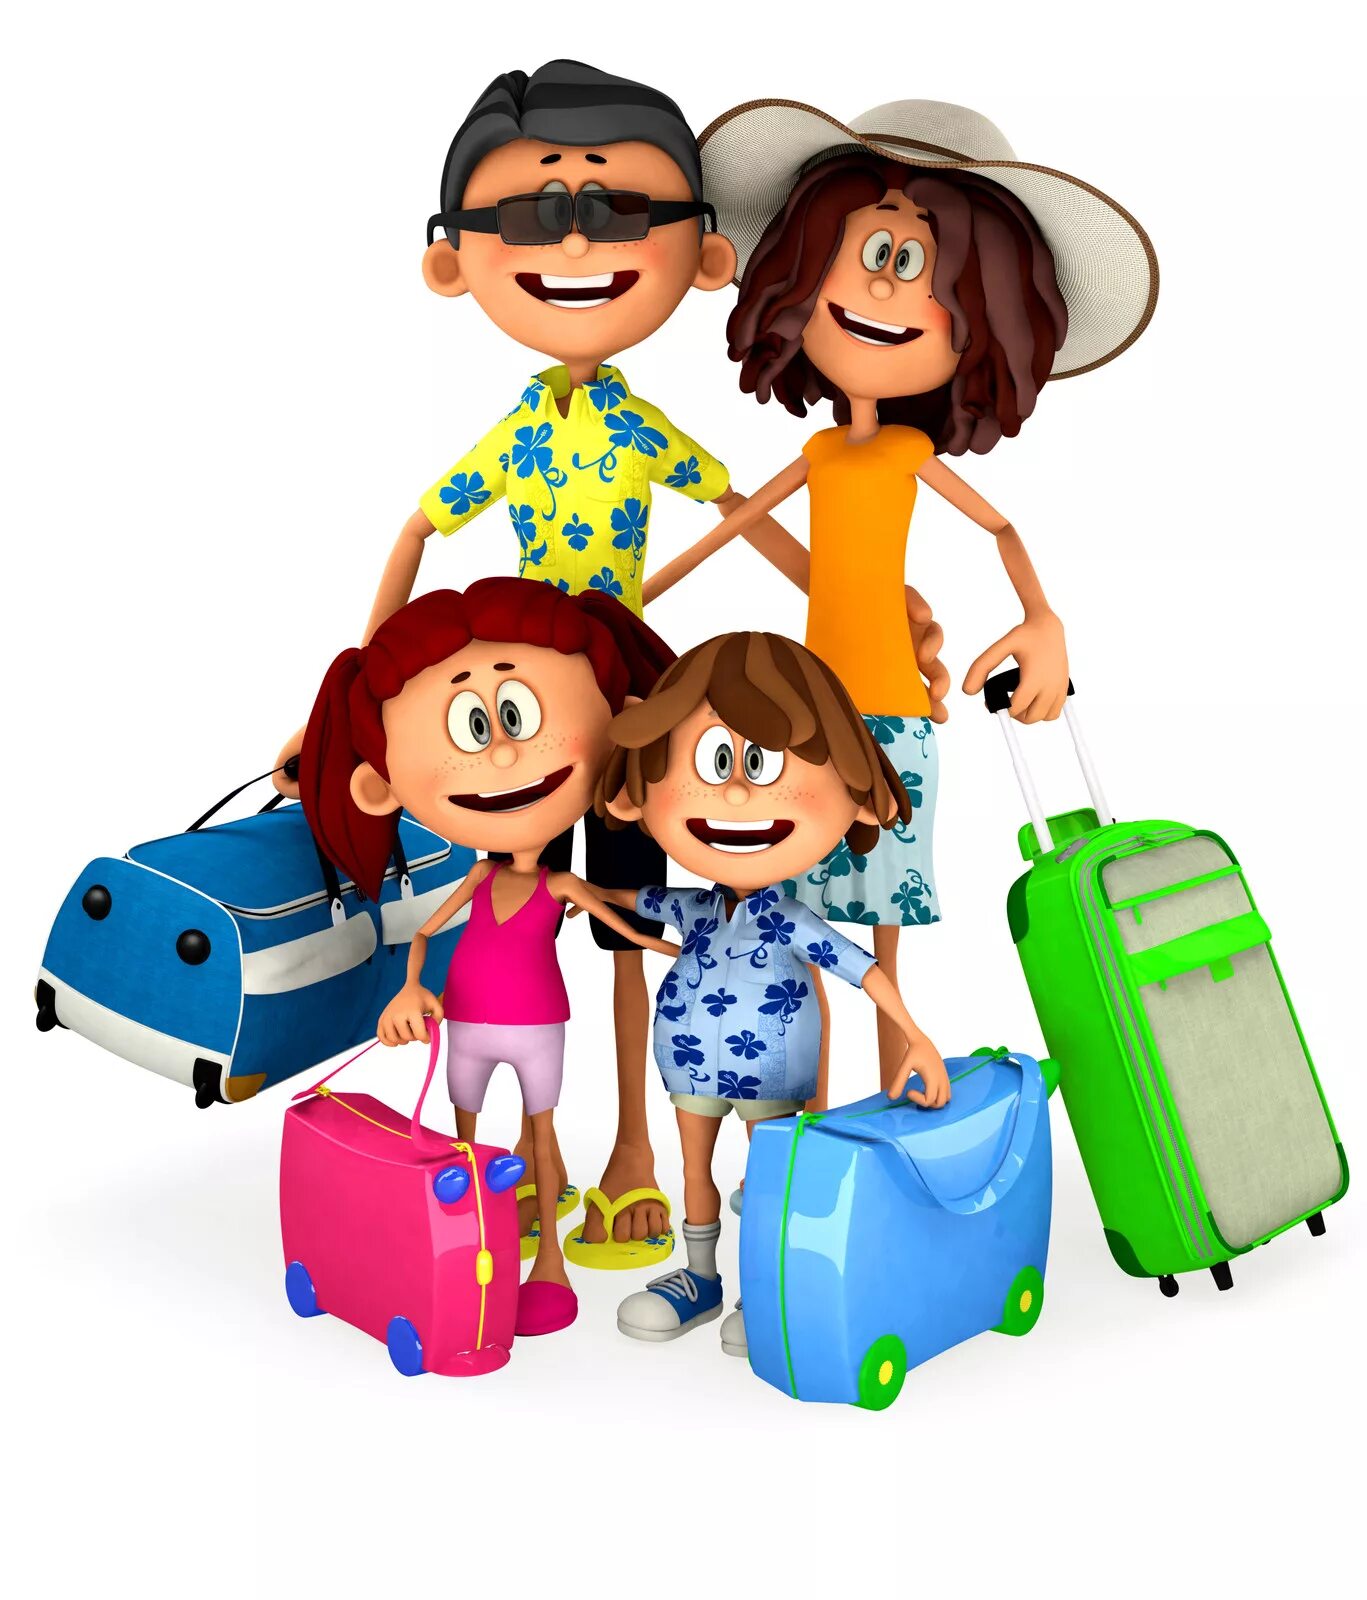 Go away on holiday. Турист на белом фоне. Путешествие с детьми. Путешествие с семьей. Семья веселая путешествует.